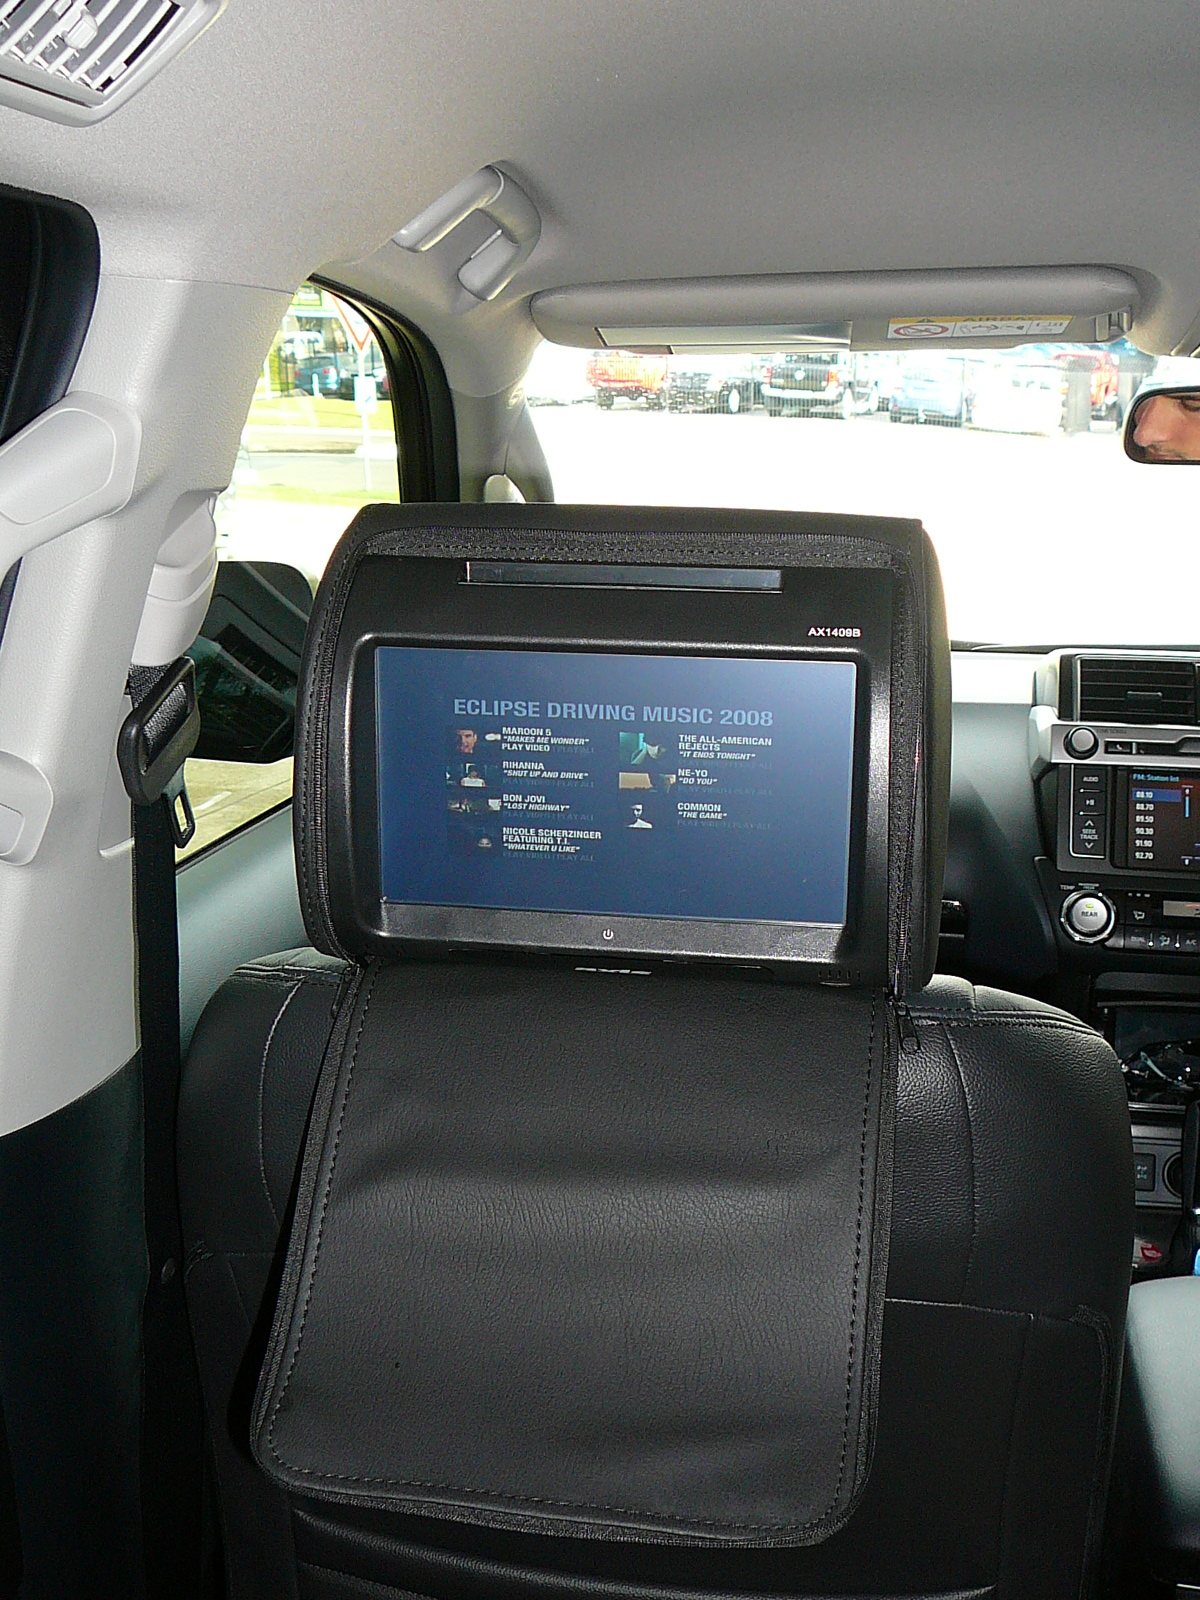 Toyota Prado 2014, 150 Series Opal 9inch DVD USB Headrest Monitors